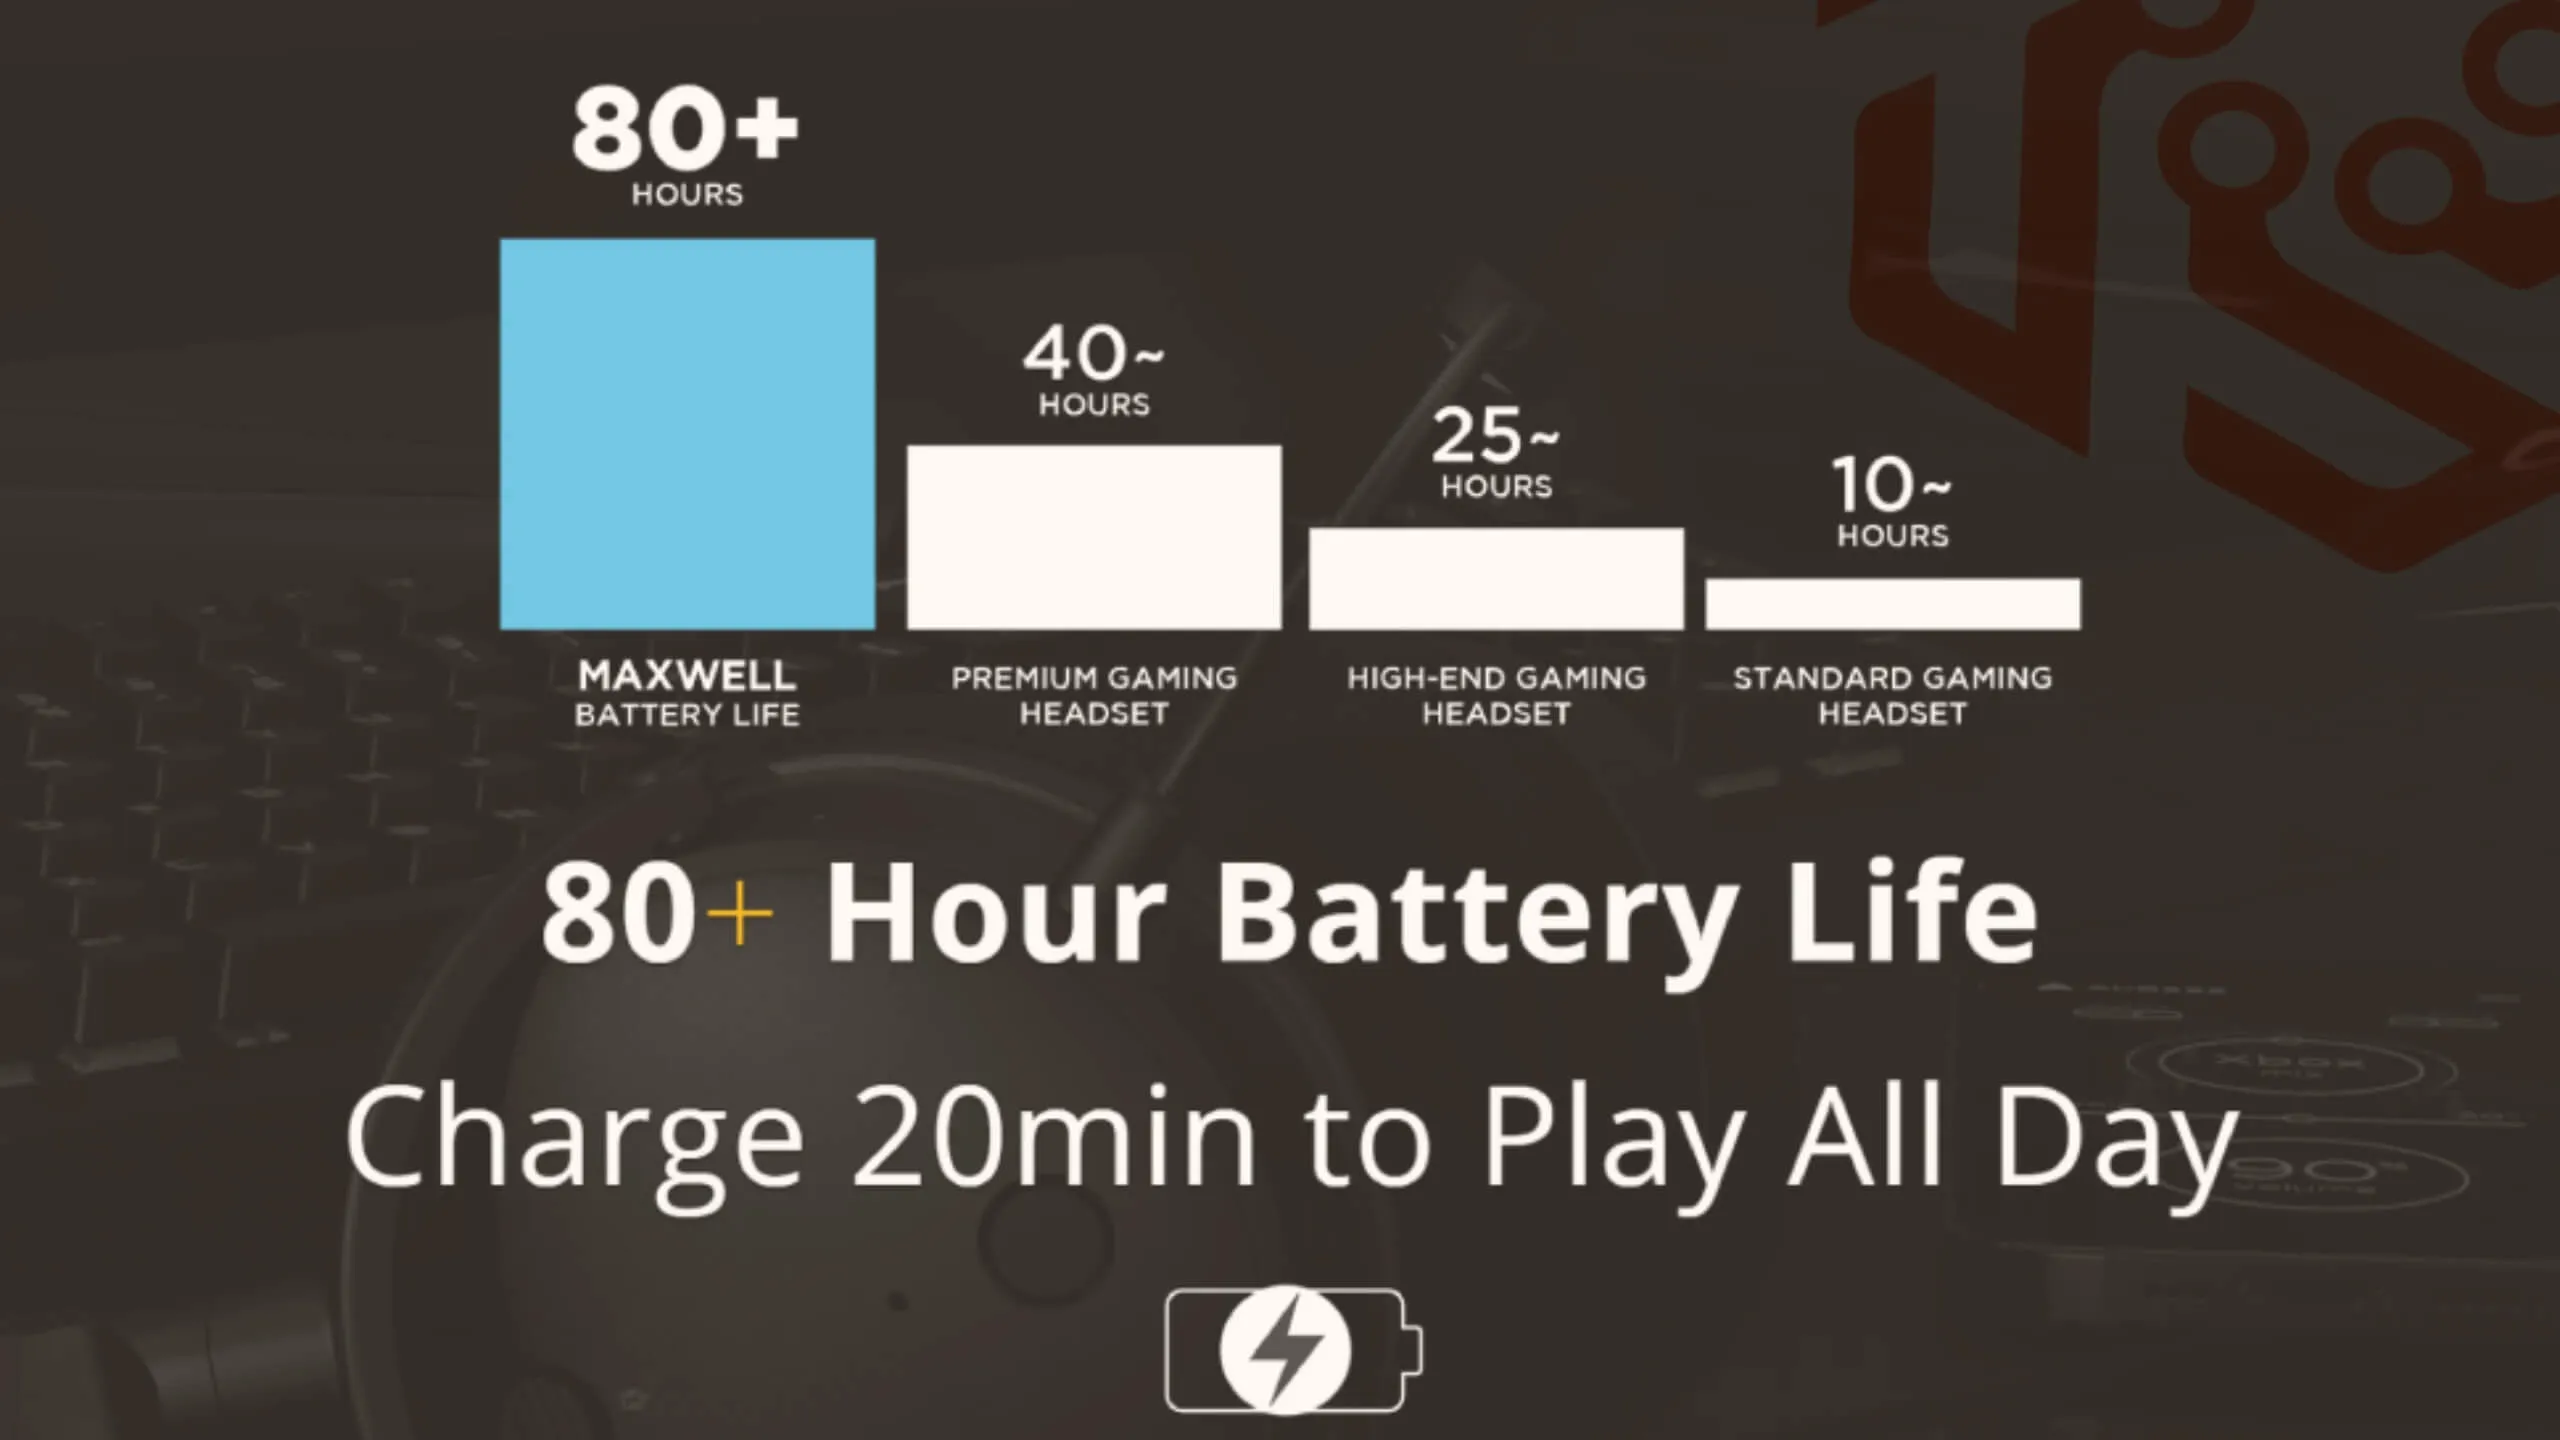 Maxwell battery life comparison